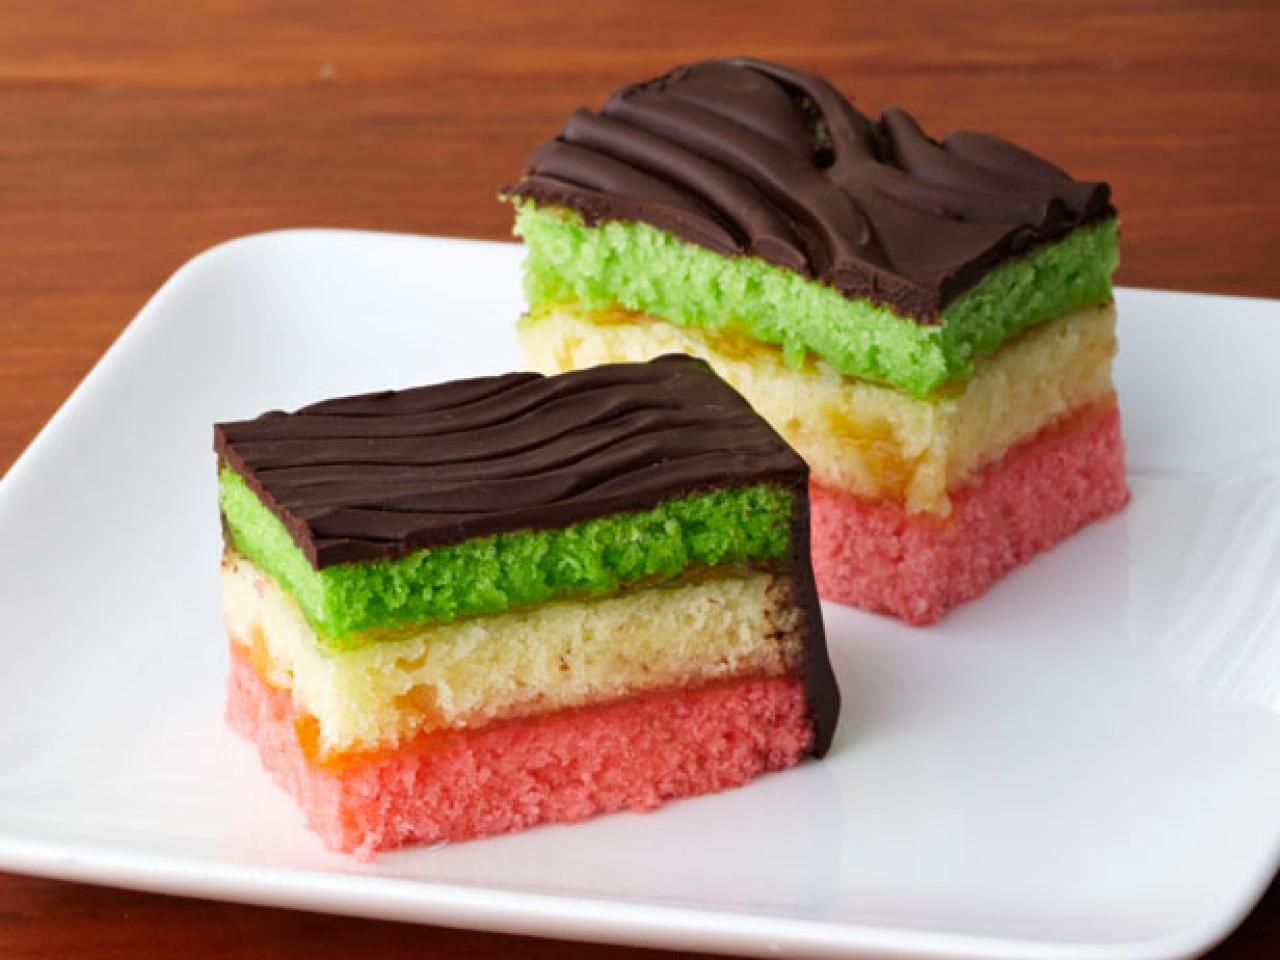 https://food.fnr.sndimg.com/content/dam/images/food/fullset/2012/11/13/5/FNM_120112-TTAH-Lidia-Bastianich-Rainbow-Cookies-1_s4x3.jpg.rend.hgtvcom.1280.960.suffix/1382545799453.jpeg